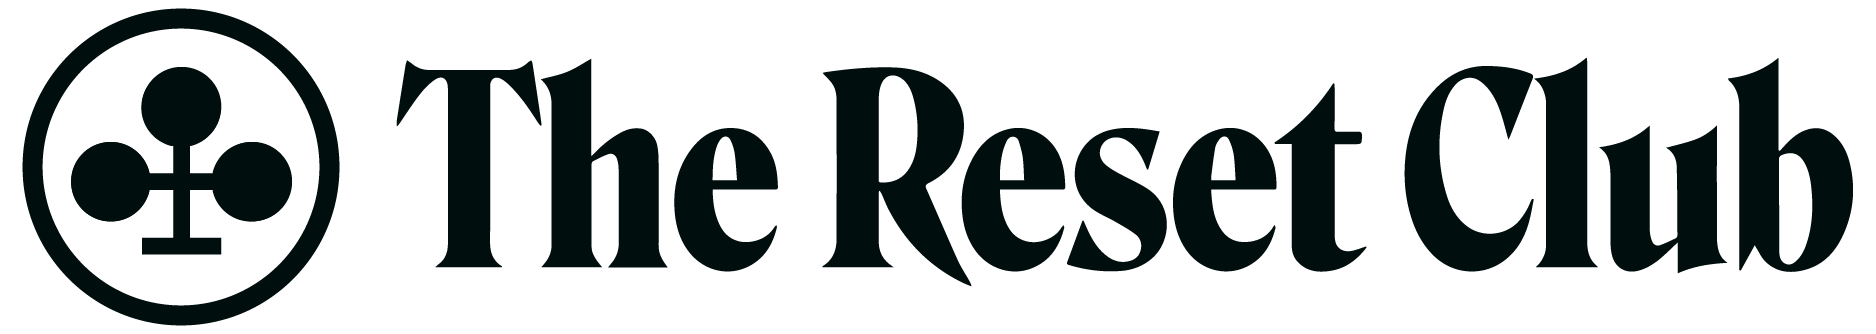 The Reset Club